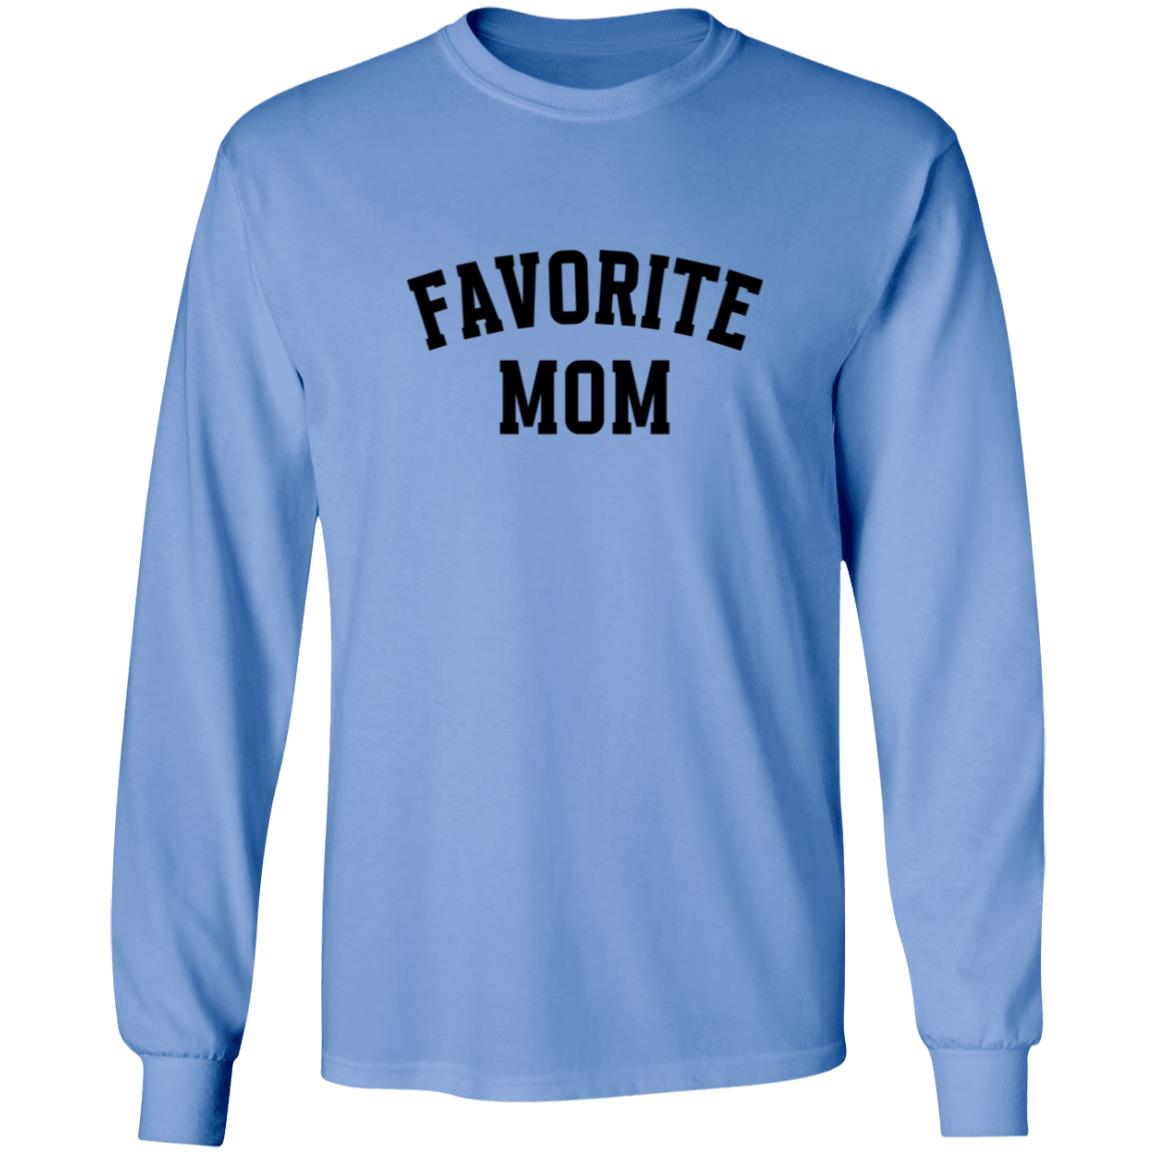 Favorite Mom: Wear Your Motherhood Proudly